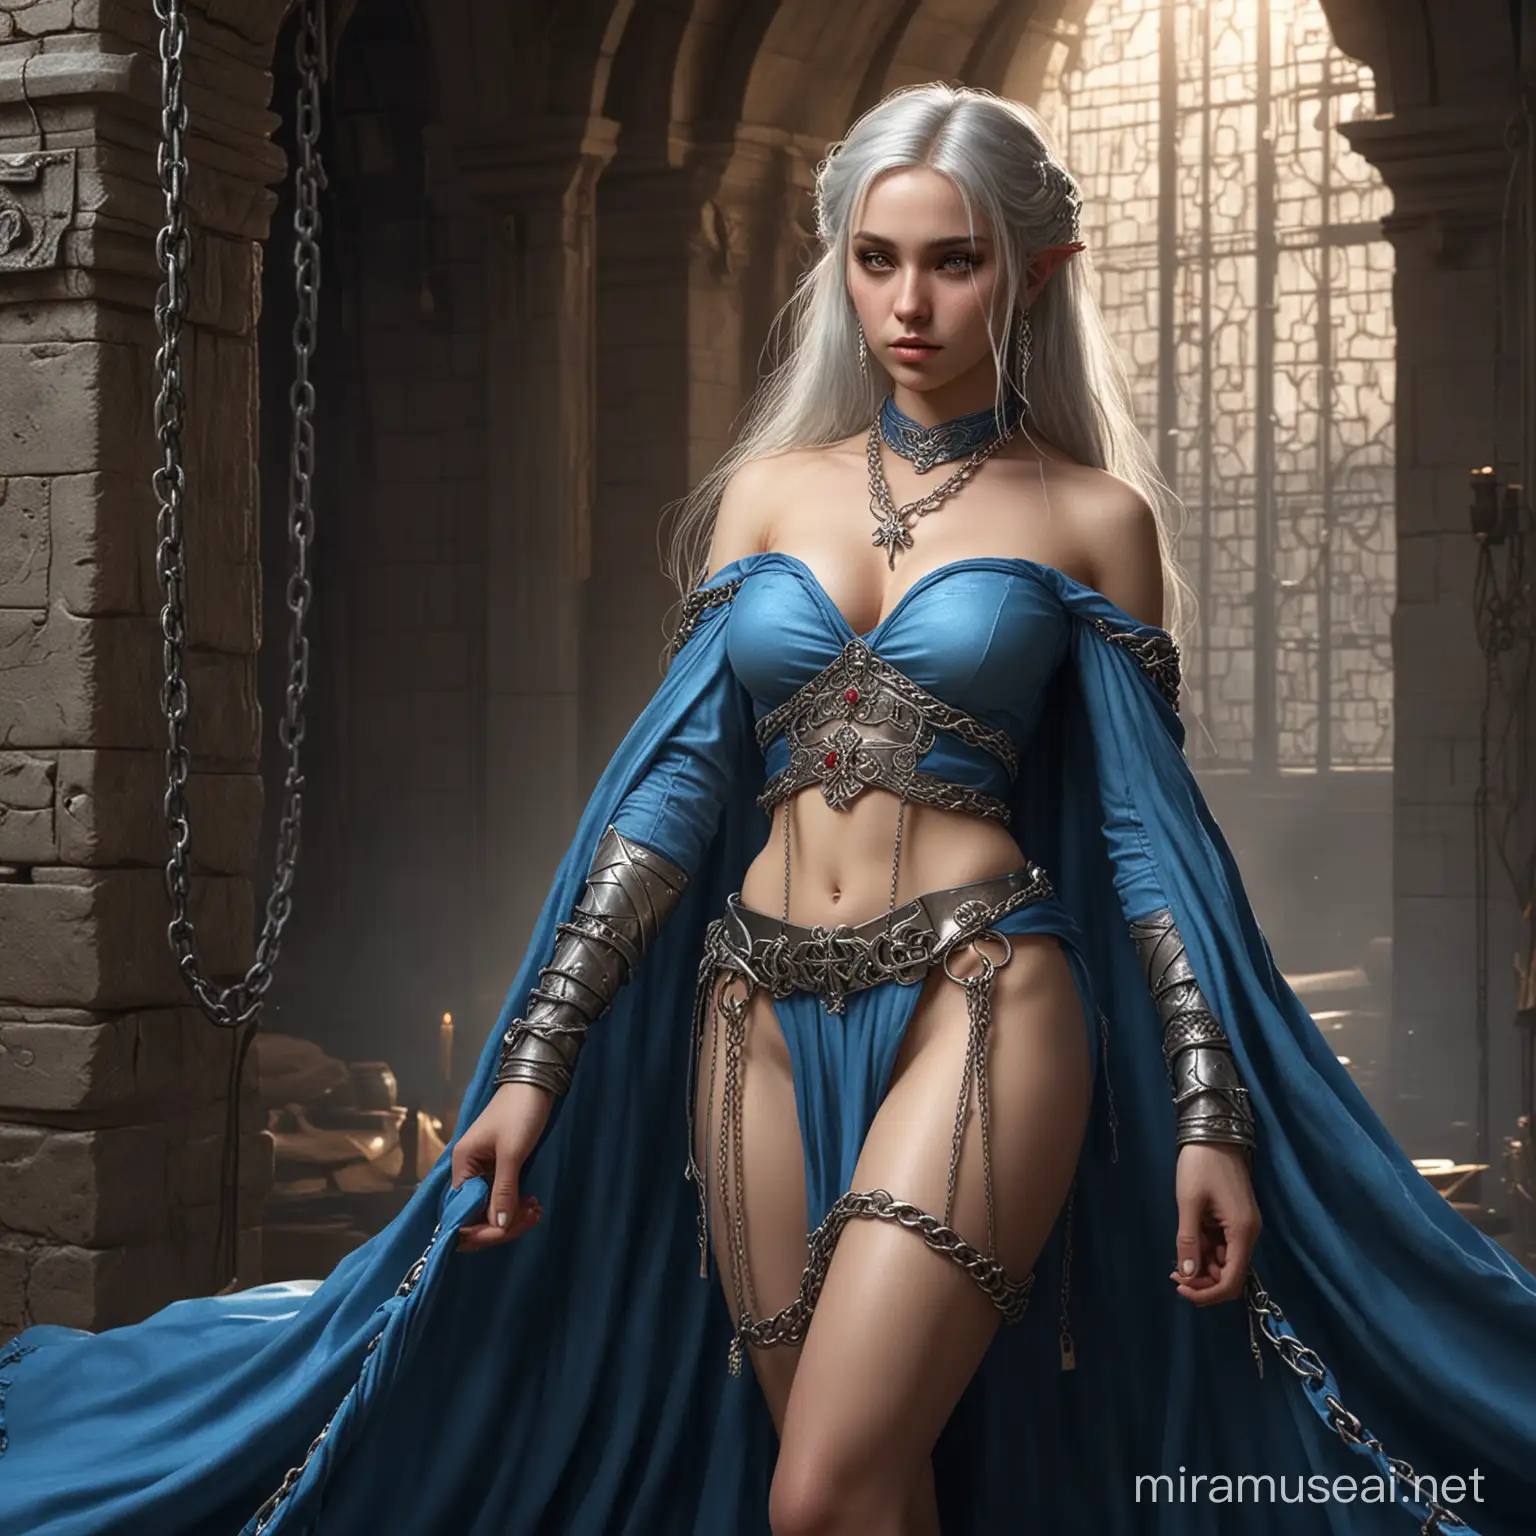 PlatinumHaired Slave Elf Princess in Blue Concubine Garb Dungeon Captivity